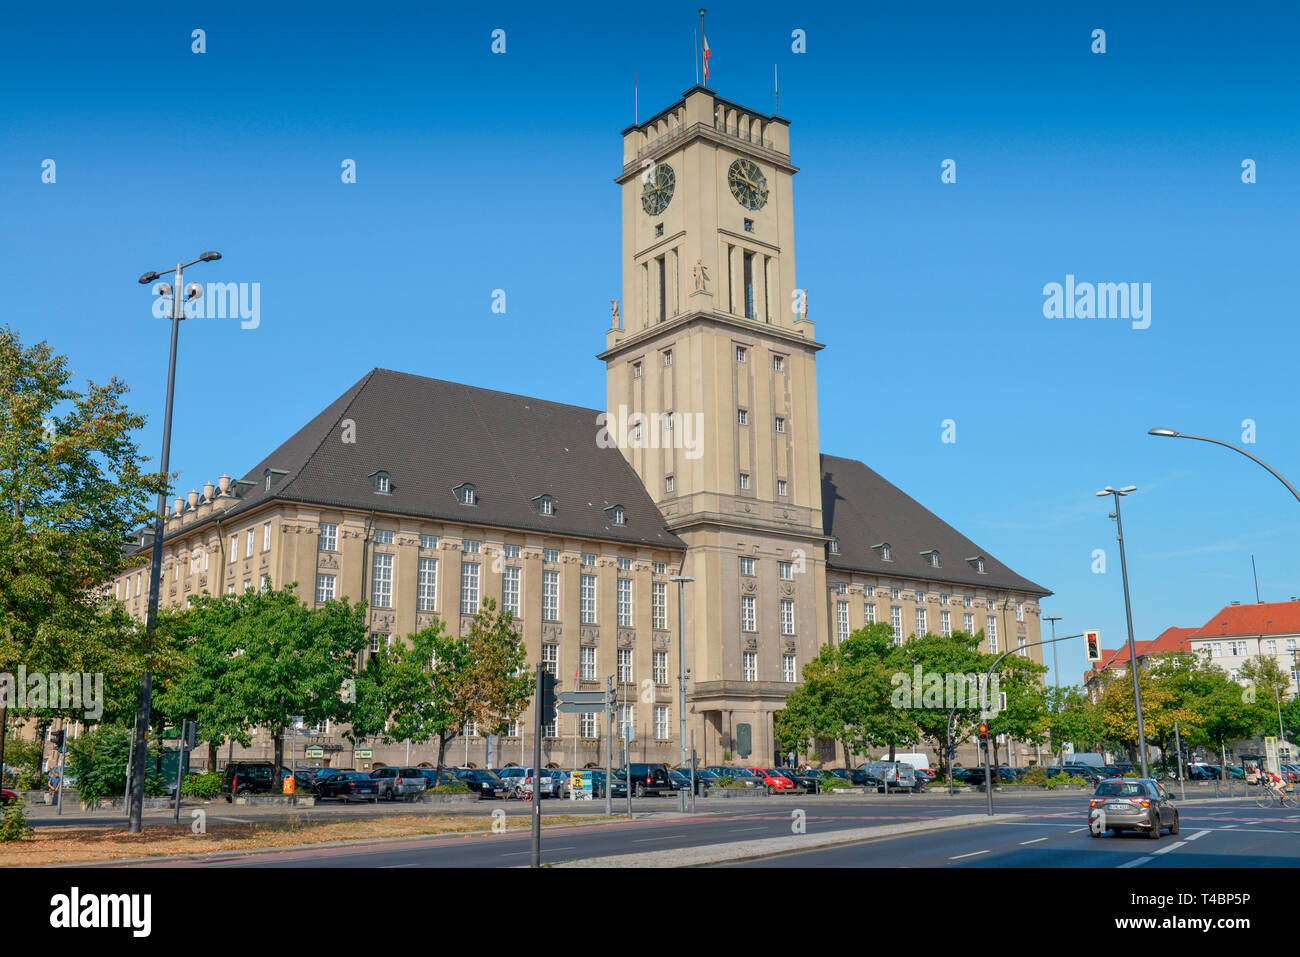 Il Rathaus Schoeneberg, John-F.-Kennedy-Platz, Schoeneberg, Berlino, Deutschland Foto Stock